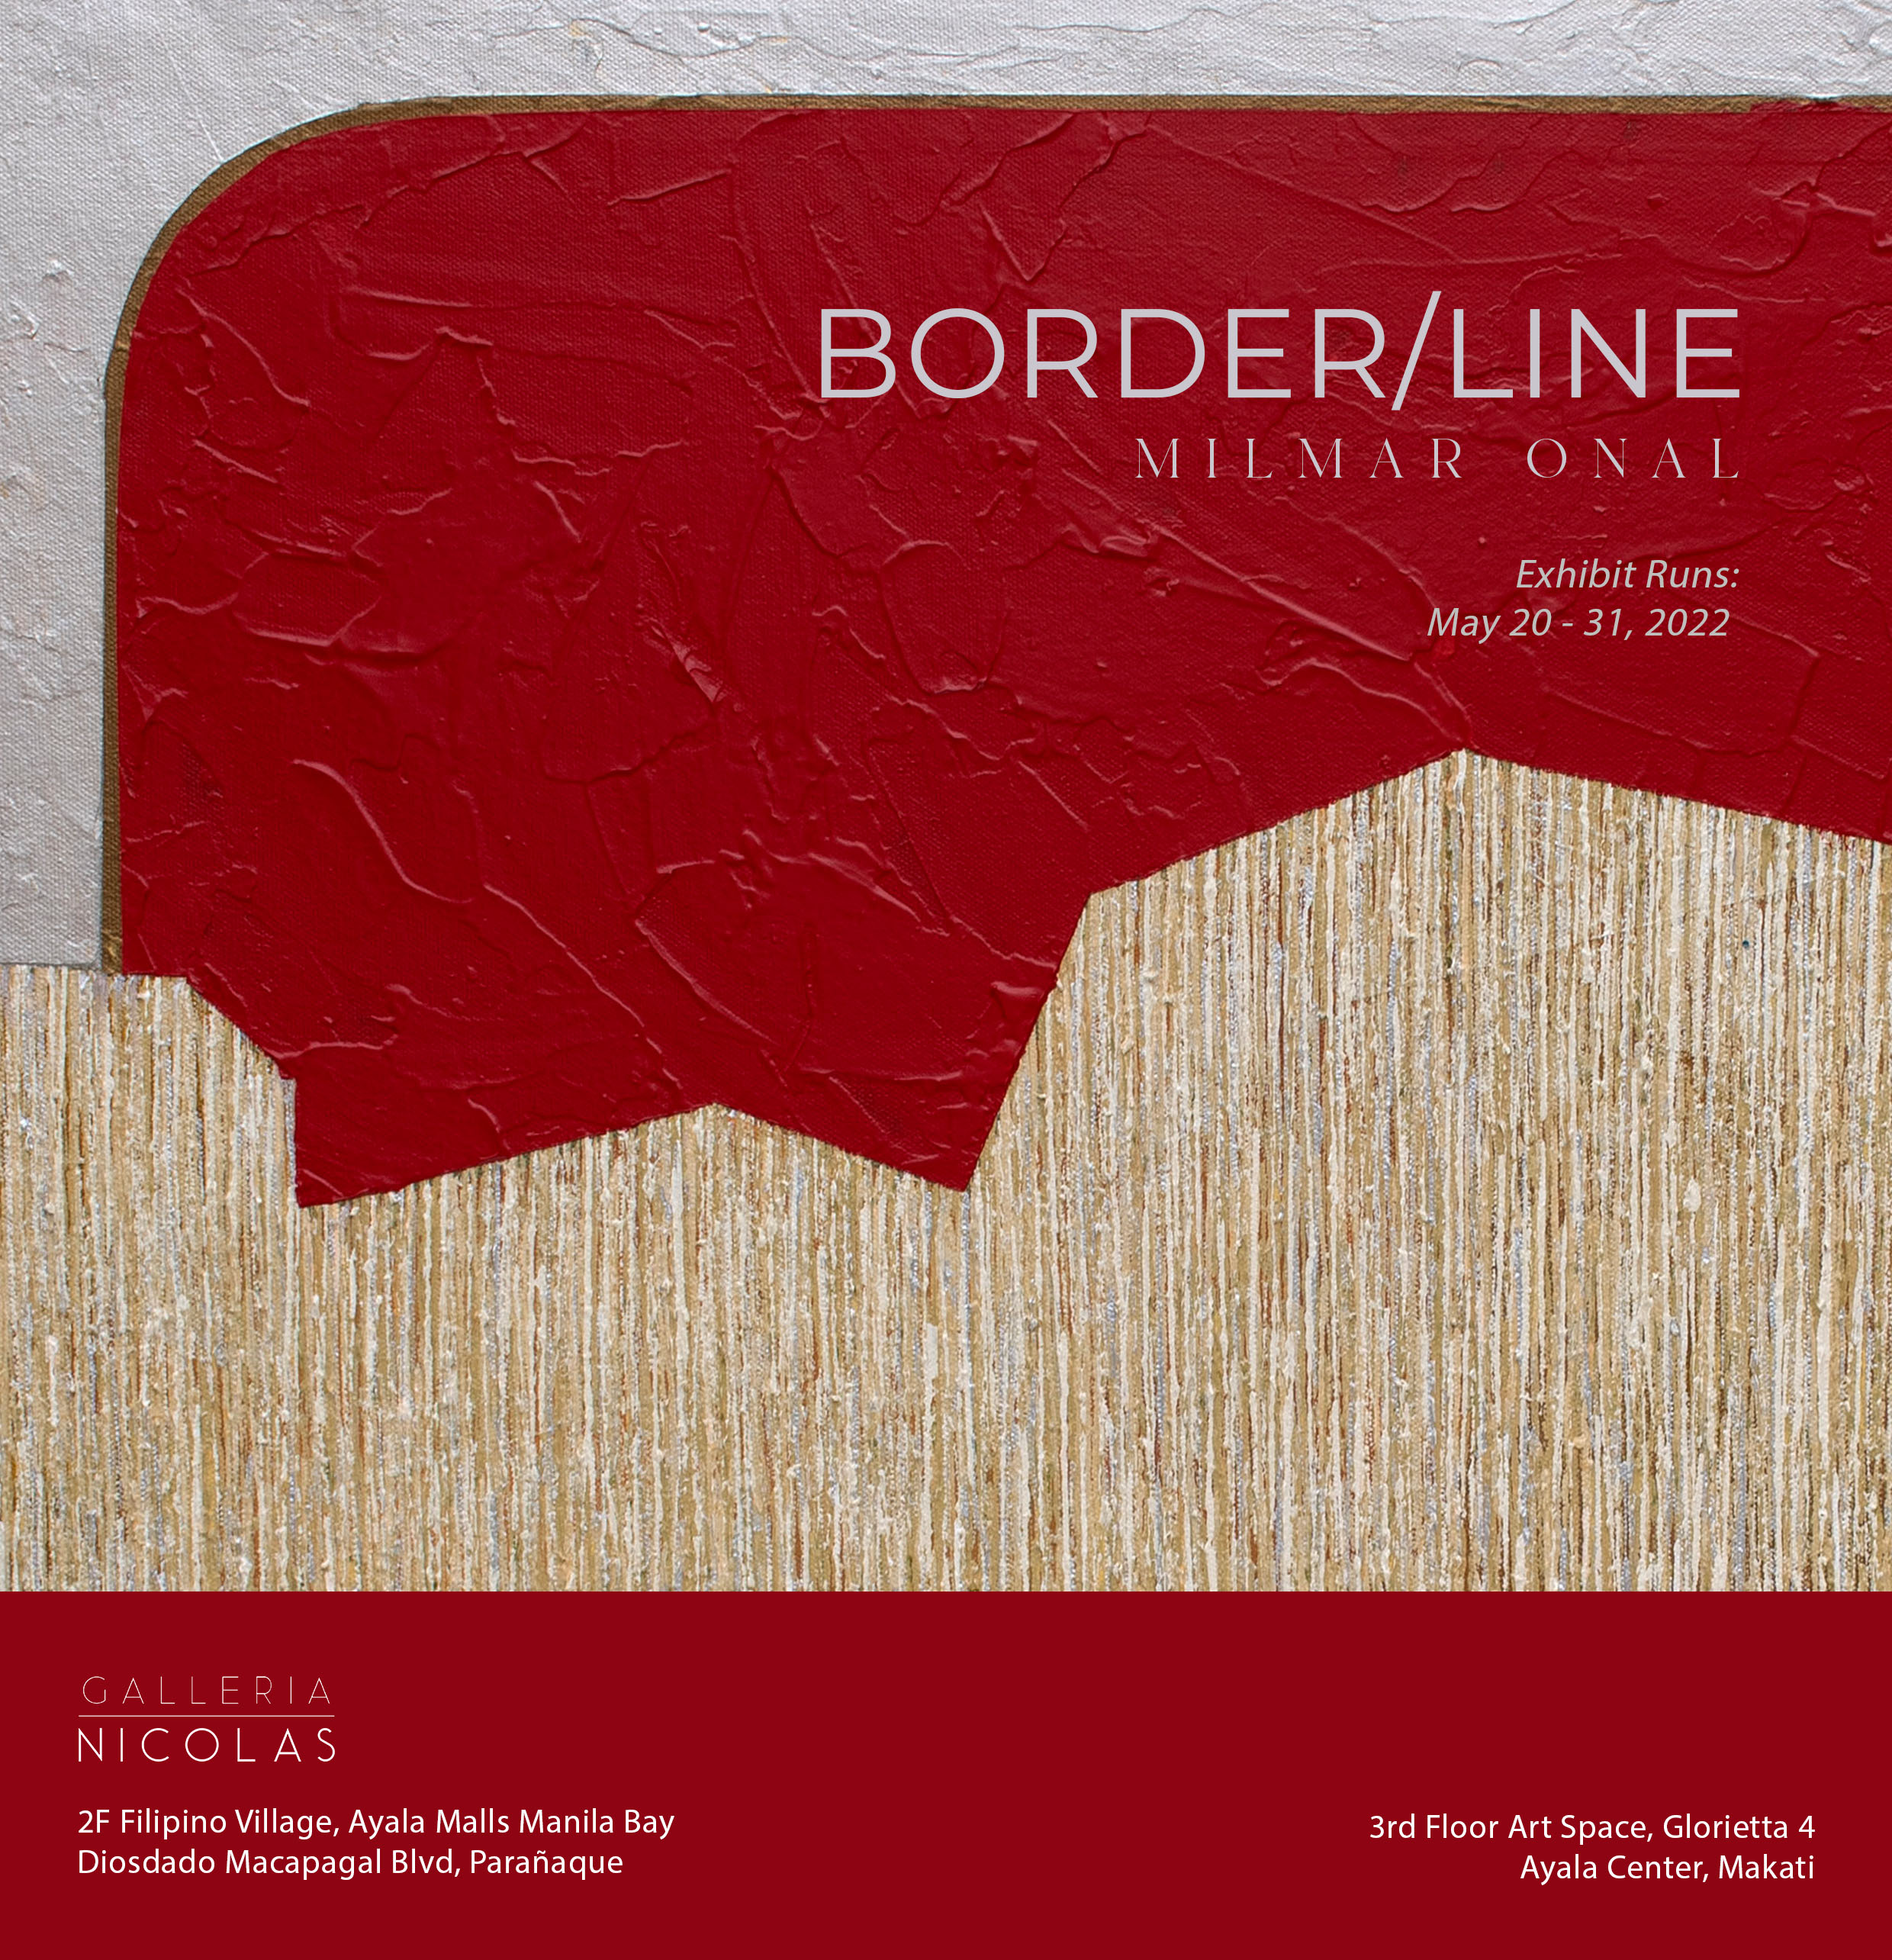 Border/Line